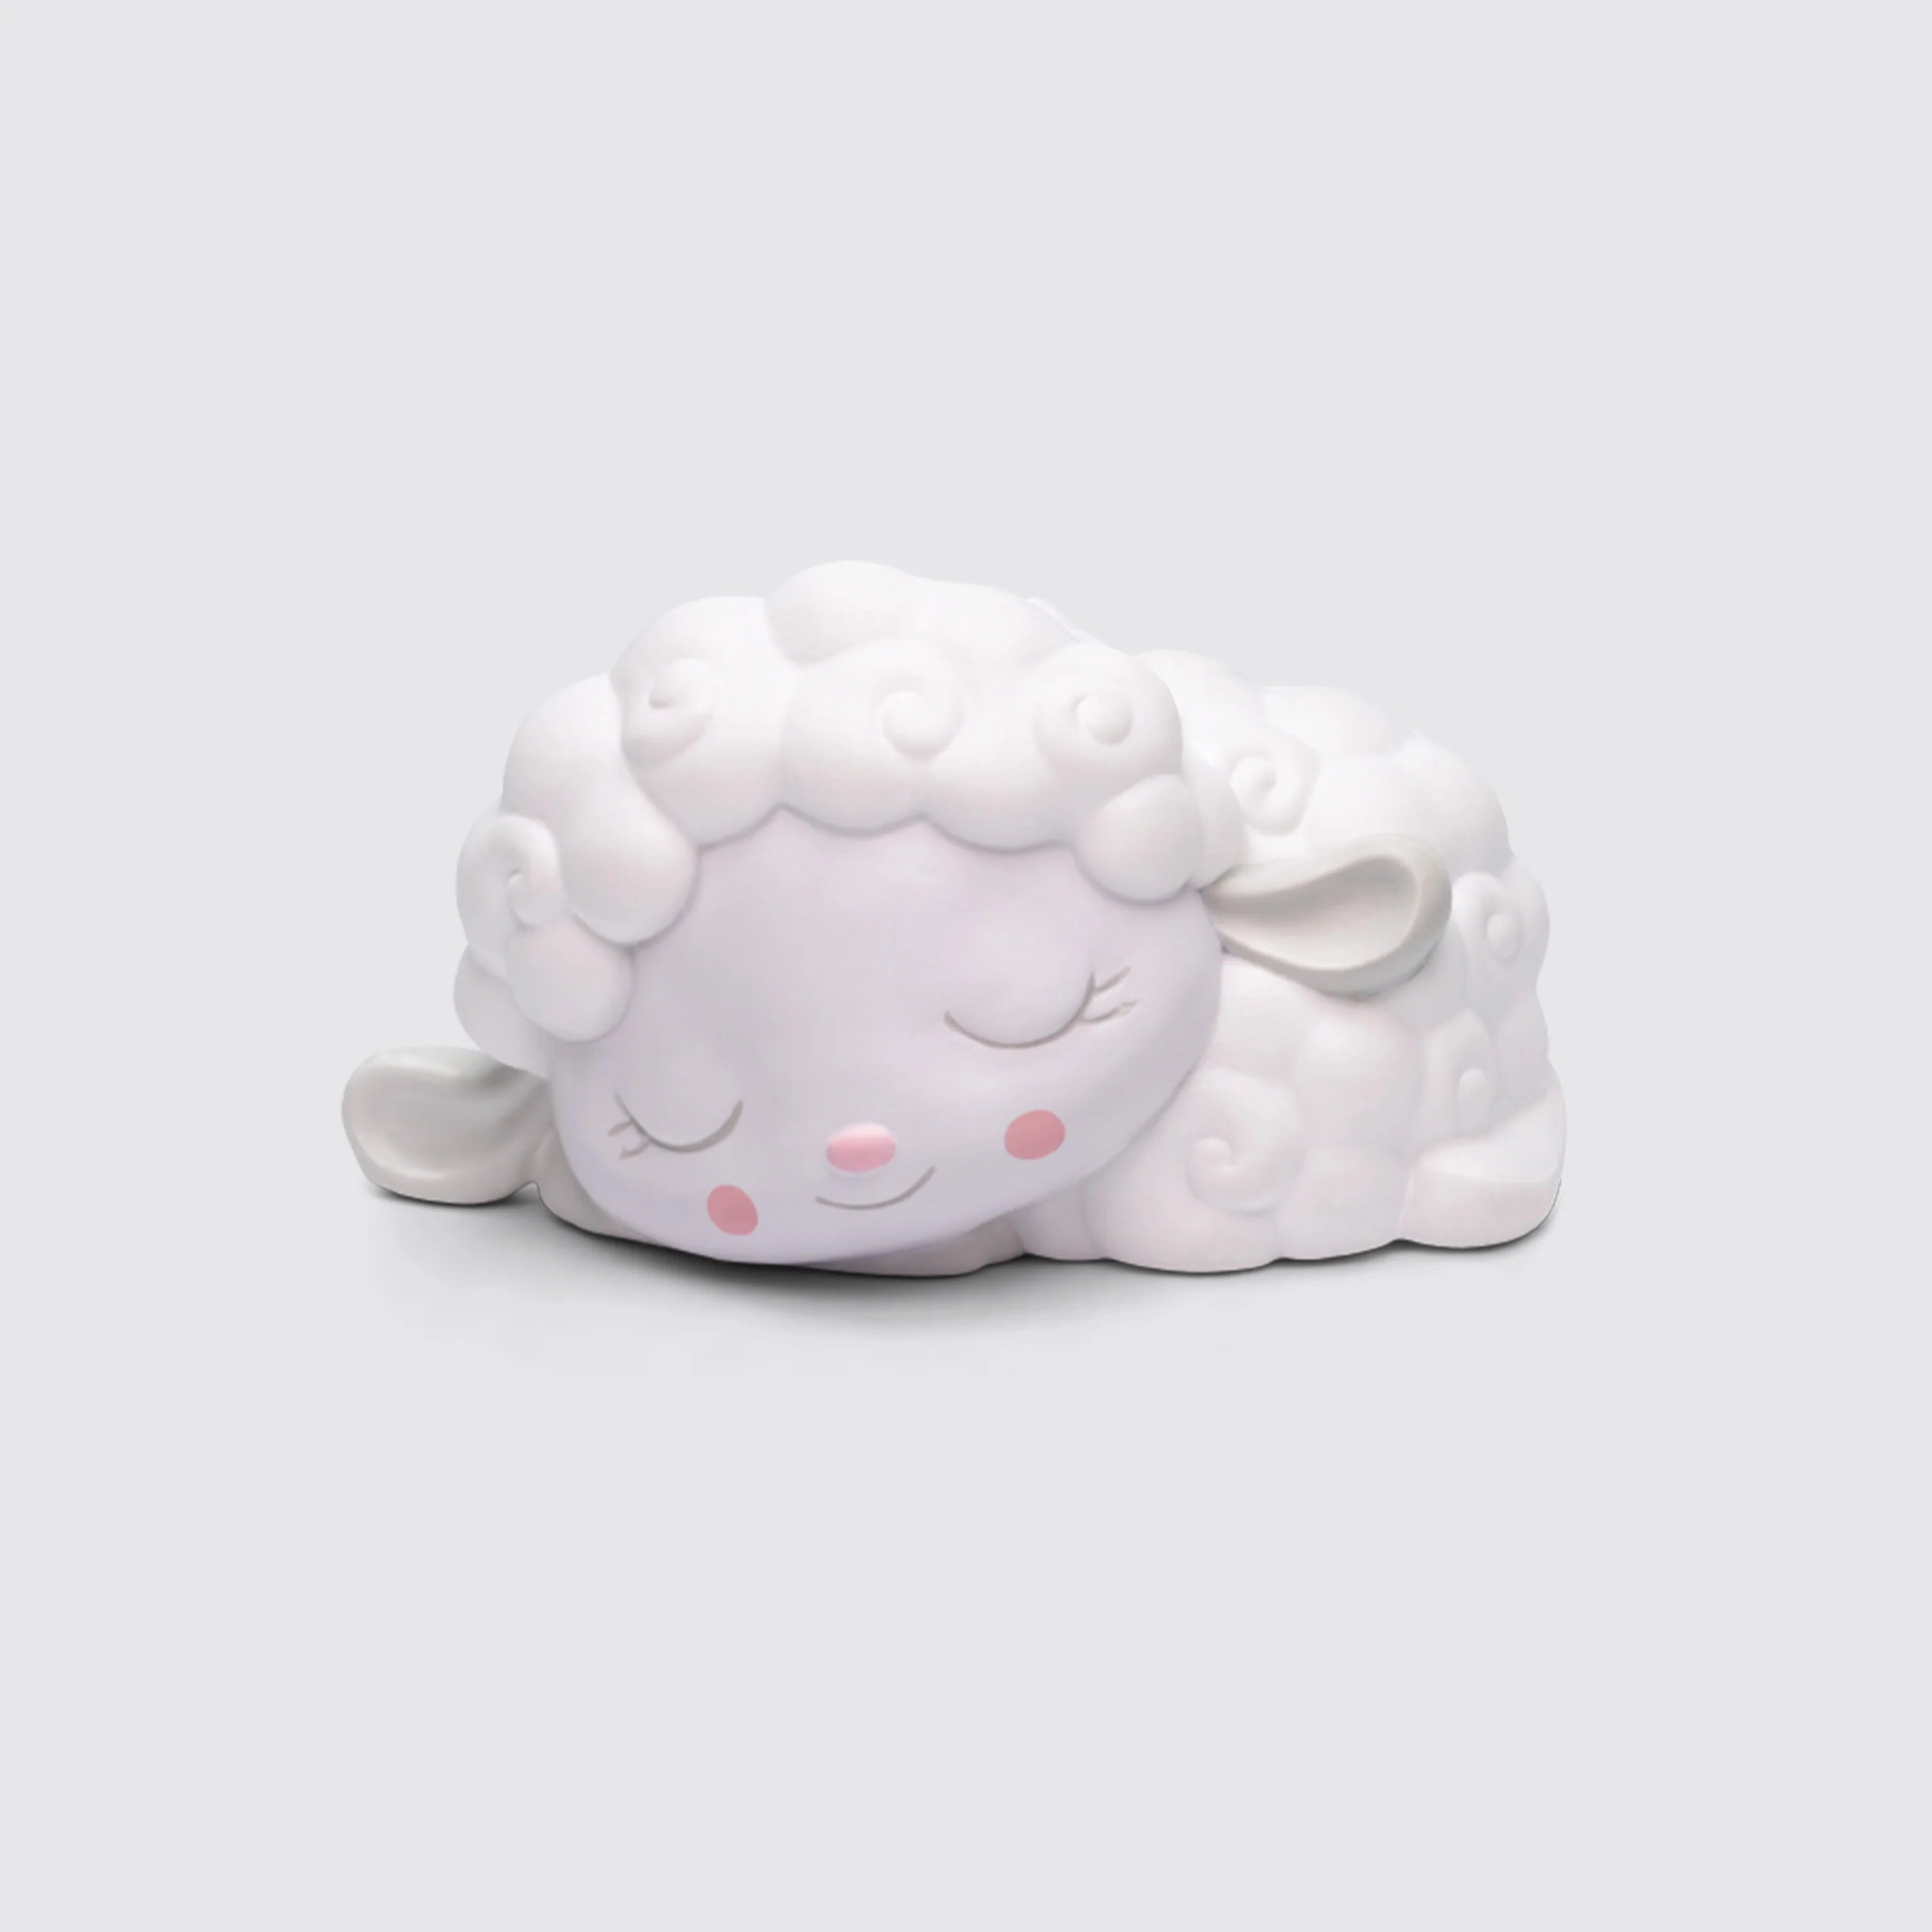 Sleepy Friends: Lullaby Melodies with Sleepy Sheep by Tonies #10001345